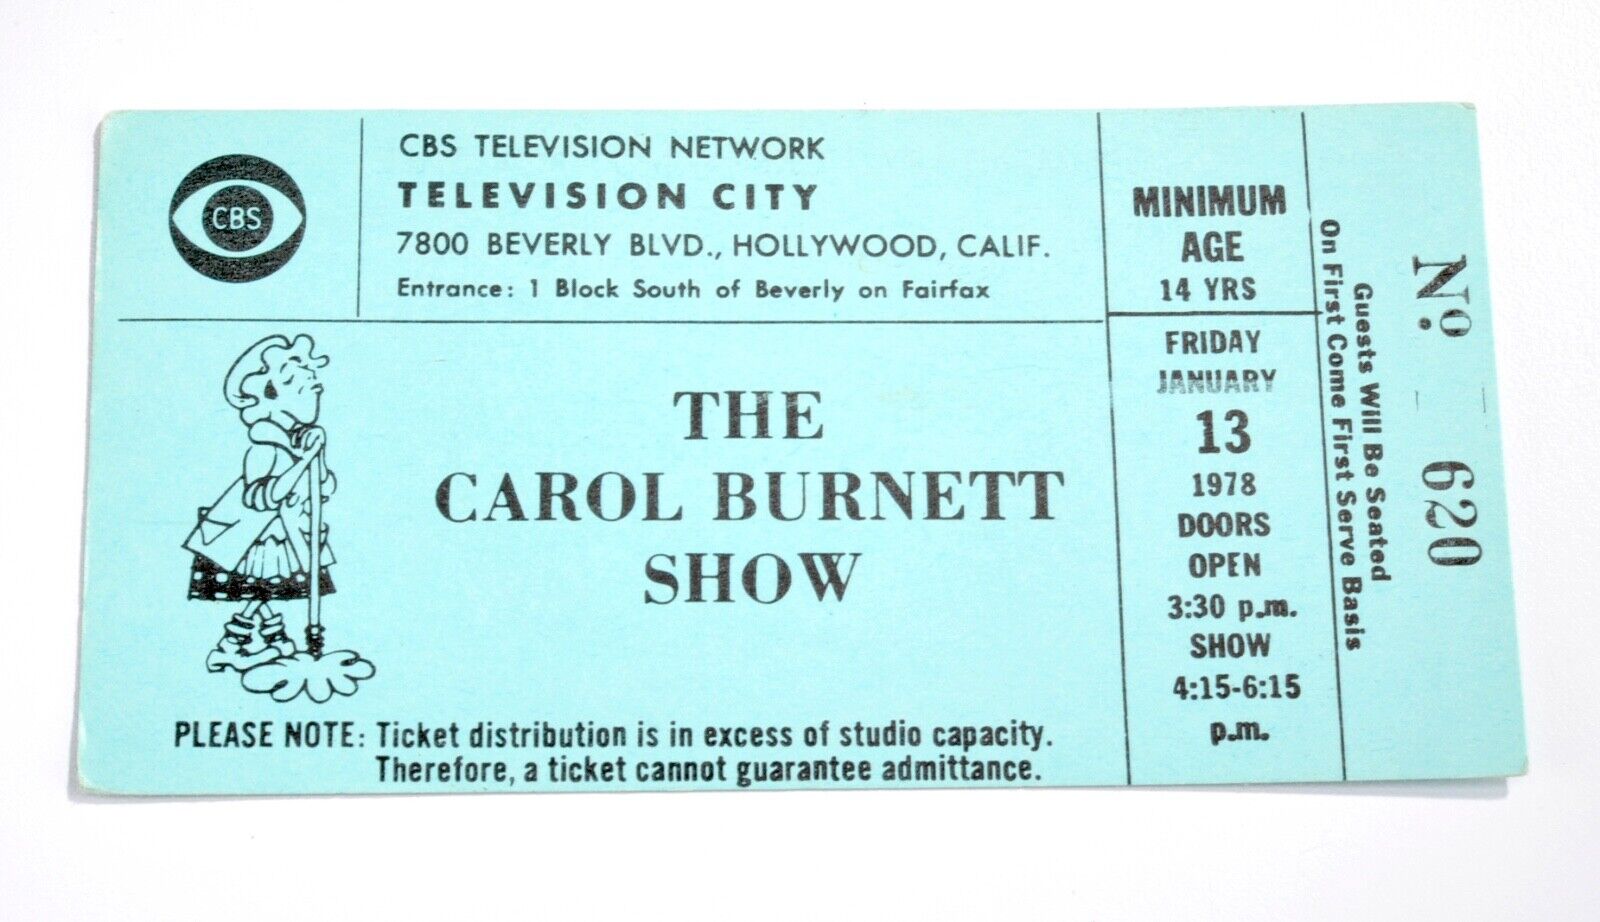 CAROL BURNETT SHOW January 1978 Ticket Stub CBS TV Network One Of The Last Shows